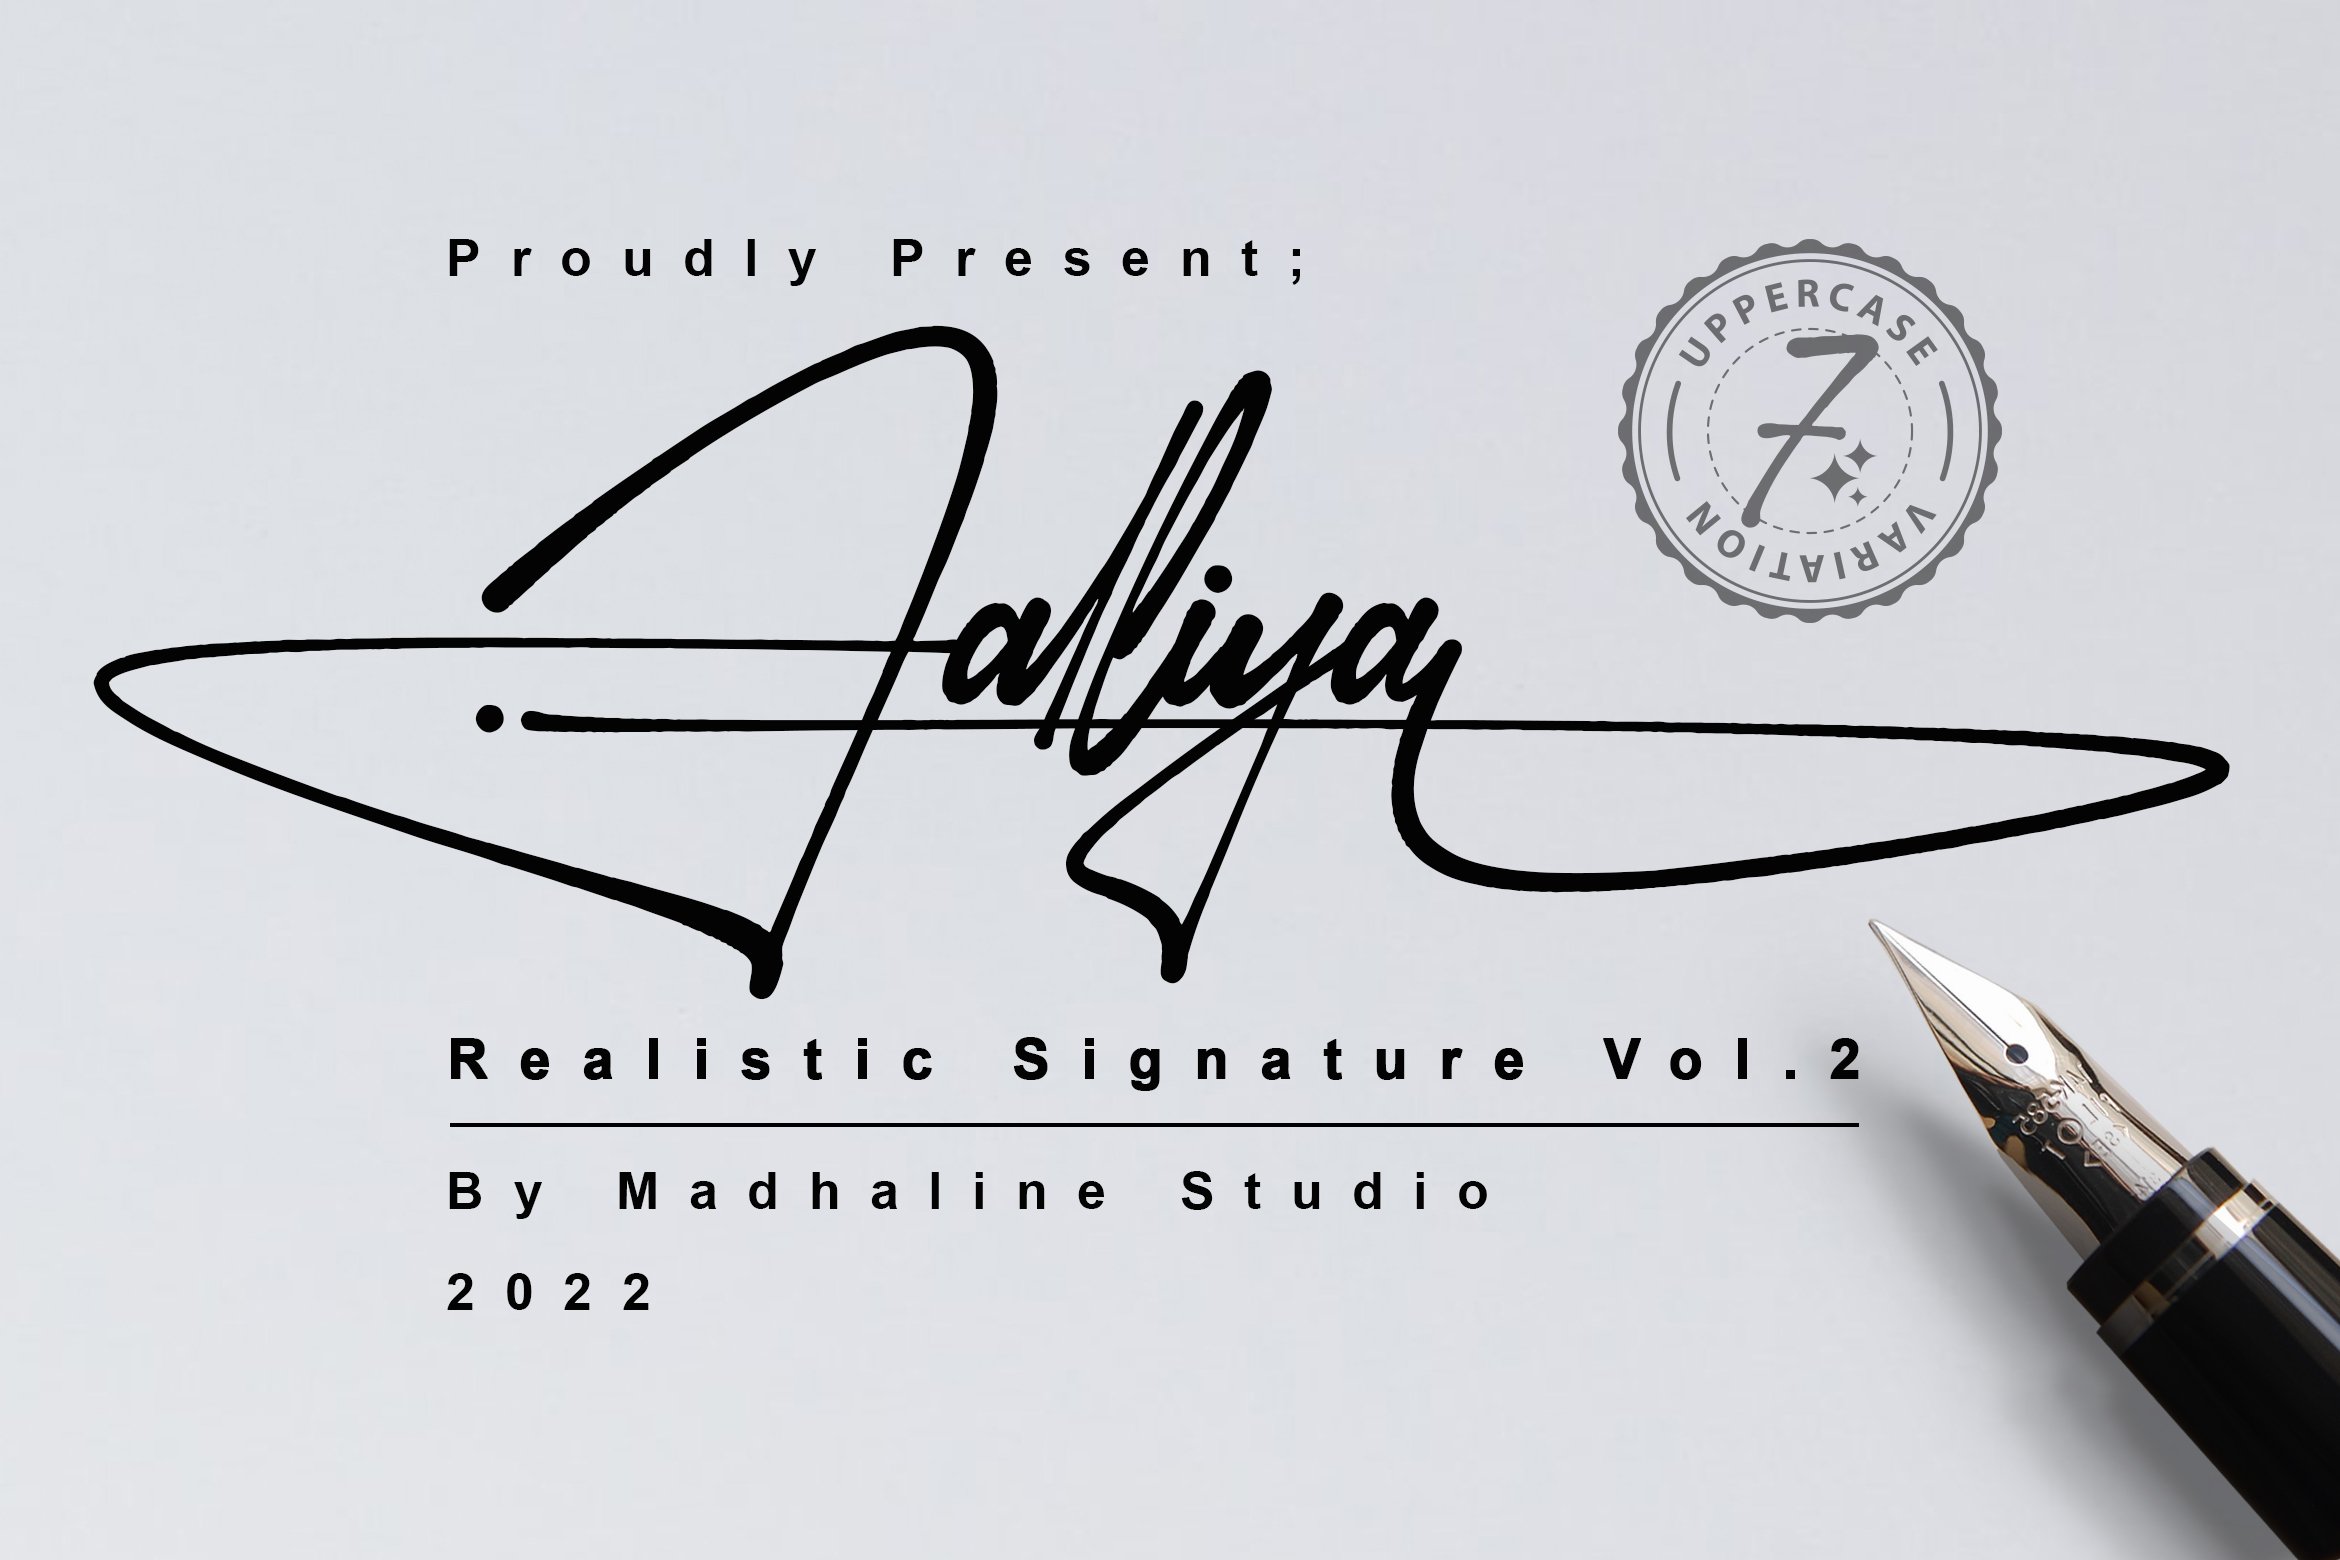 Jalliya 7 Realistic Signature Vol.2 cover image.